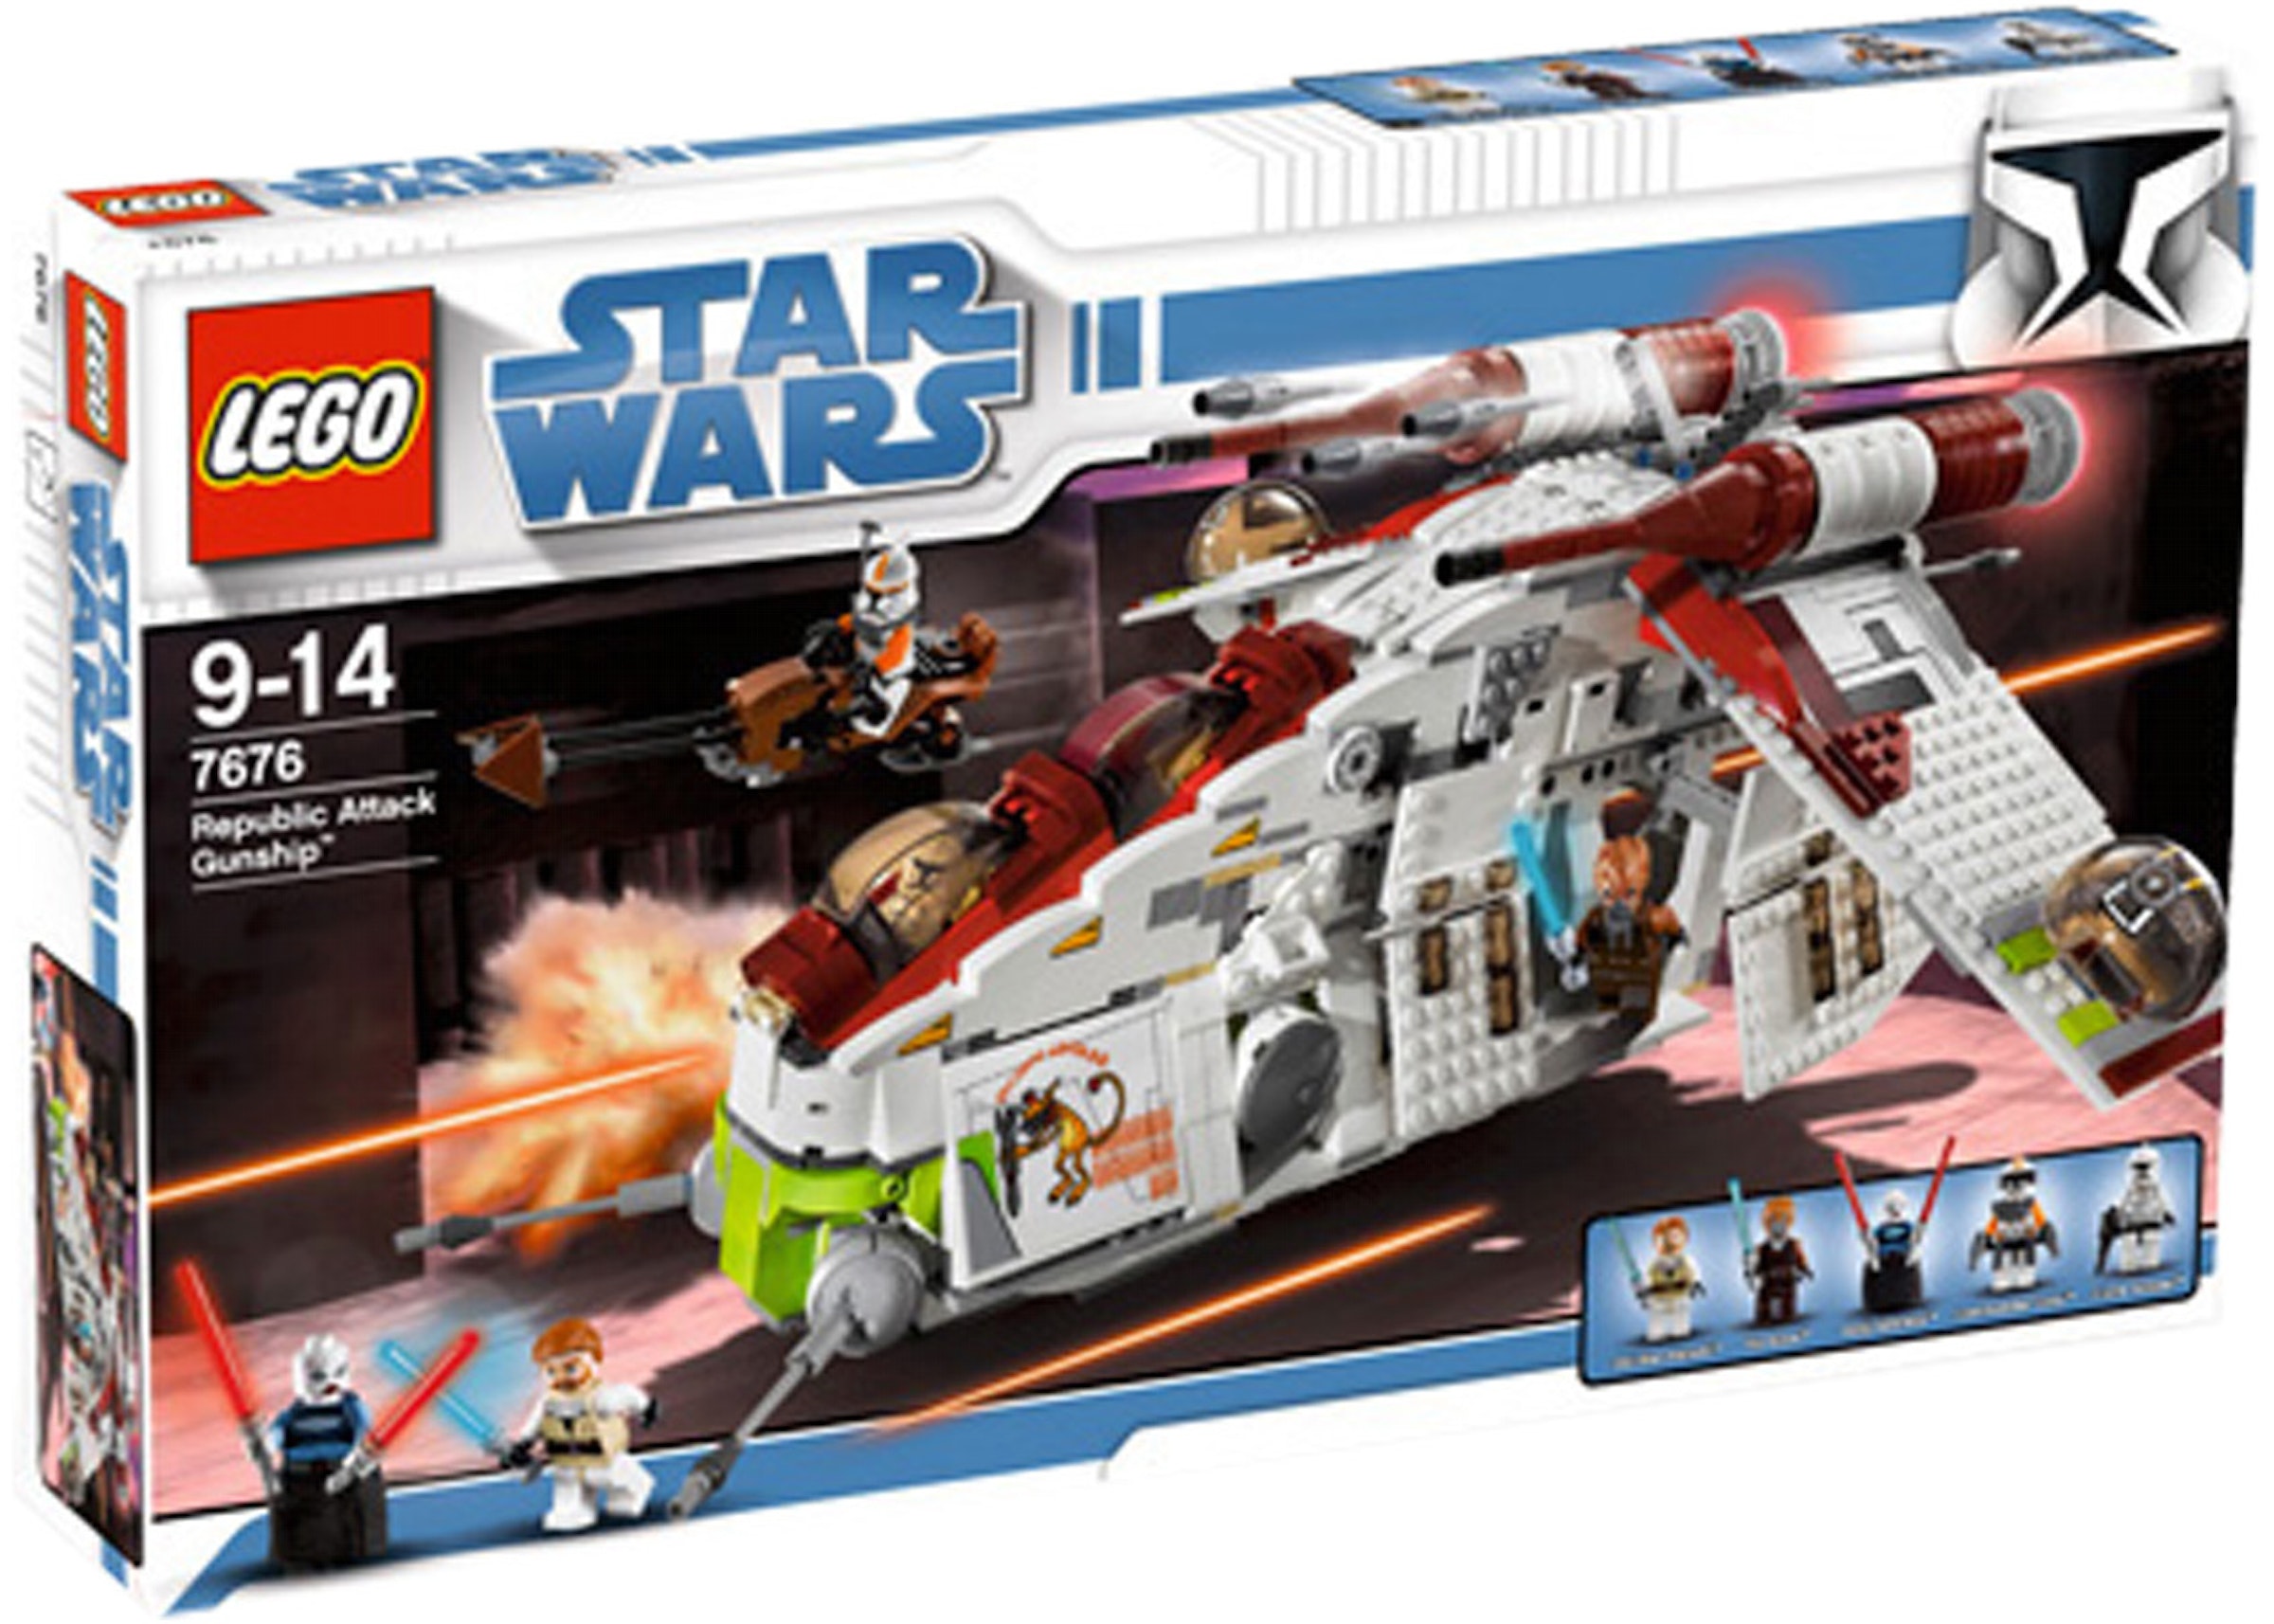 Visum ildsted narre LEGO Star Wars Republic Attack Gunship Set 7676 - JP